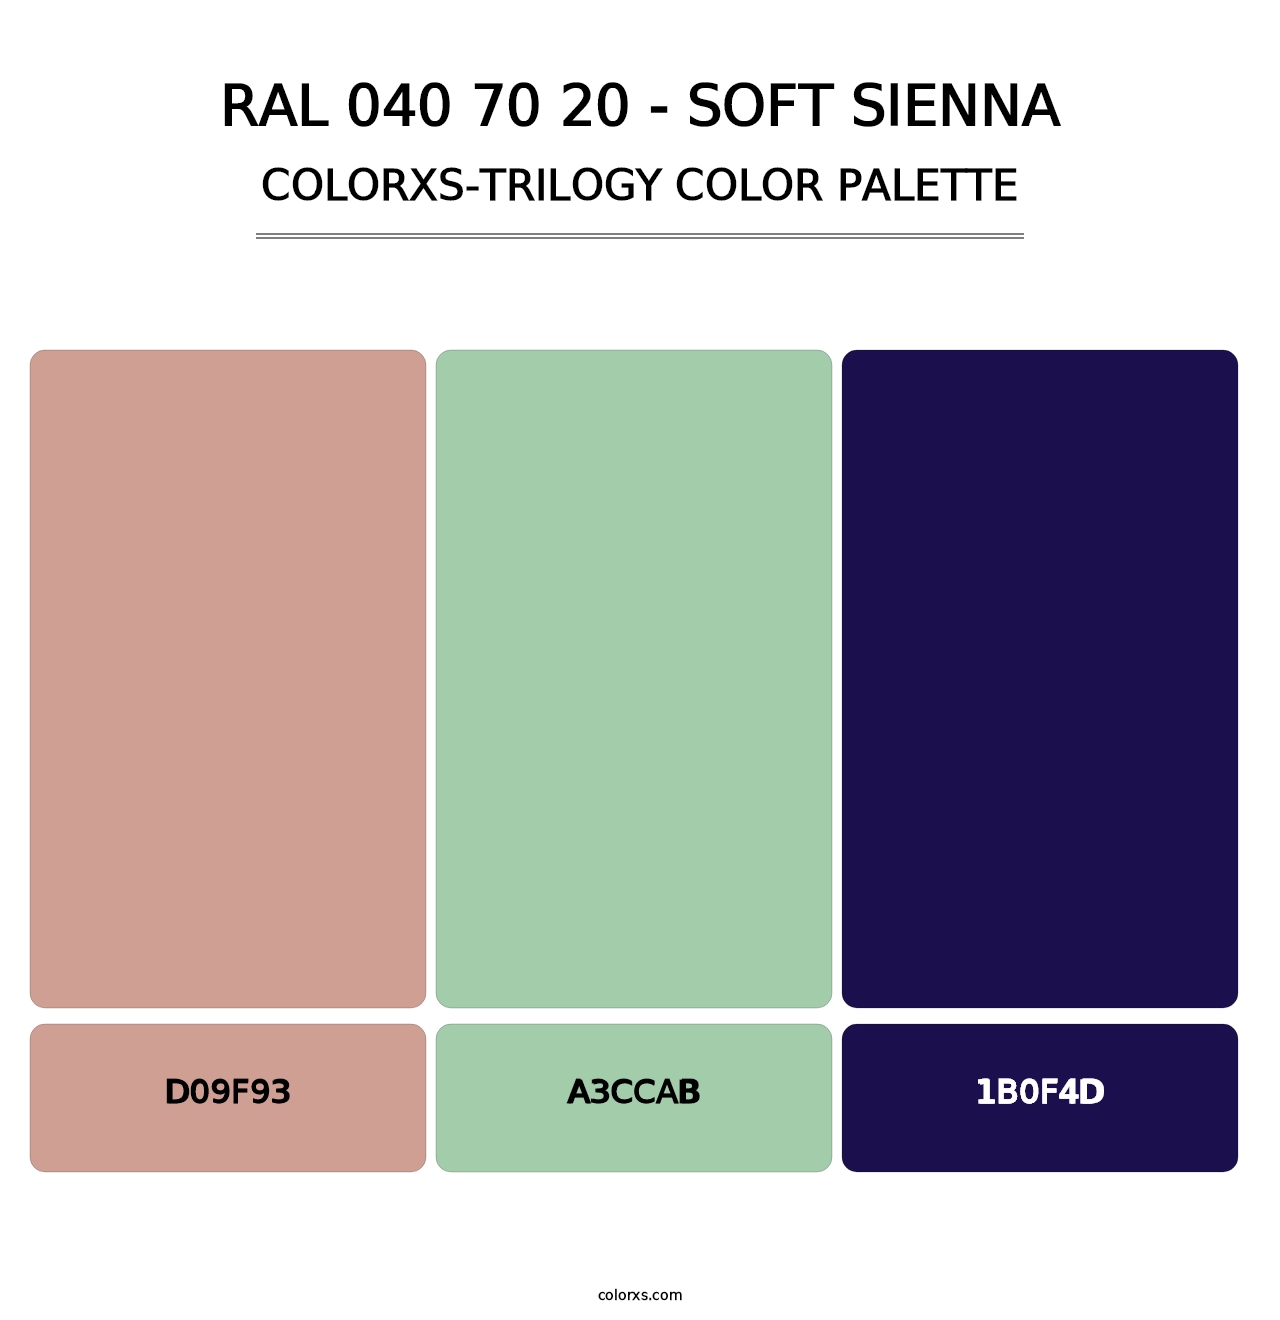 RAL 040 70 20 - Soft Sienna - Colorxs Trilogy Palette